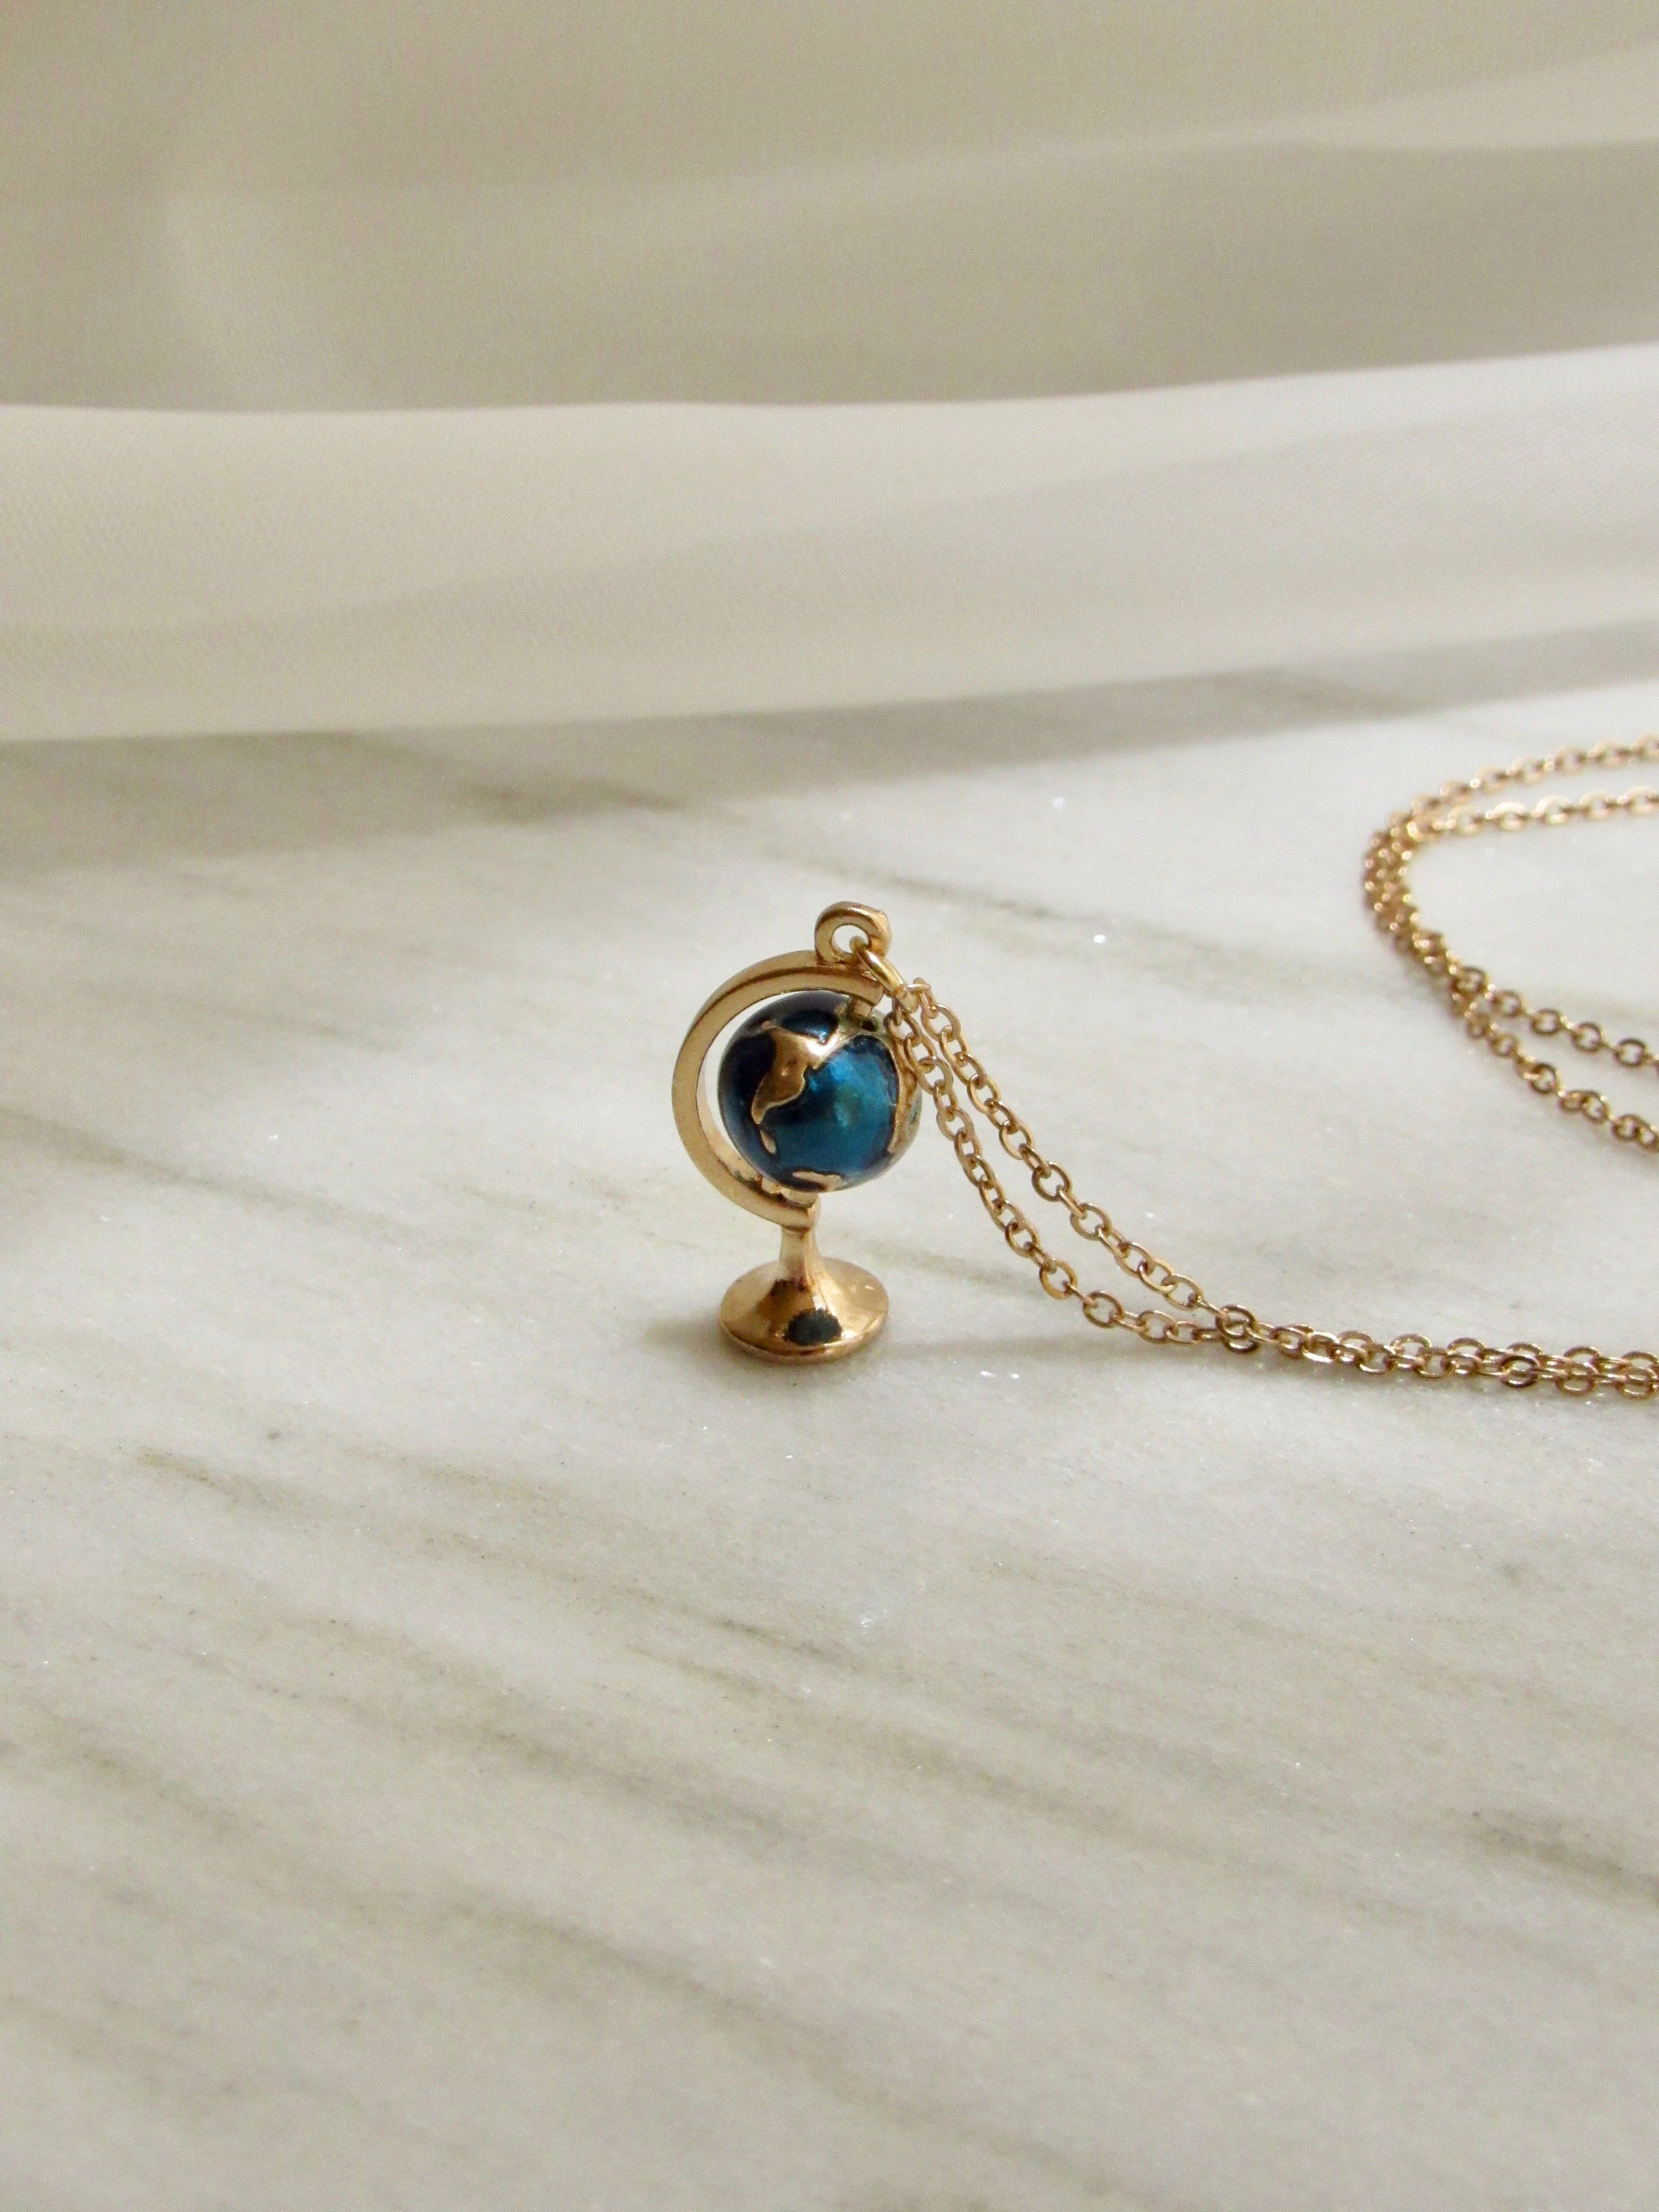 Terrestrial Globe Pendant Necklace in Gold